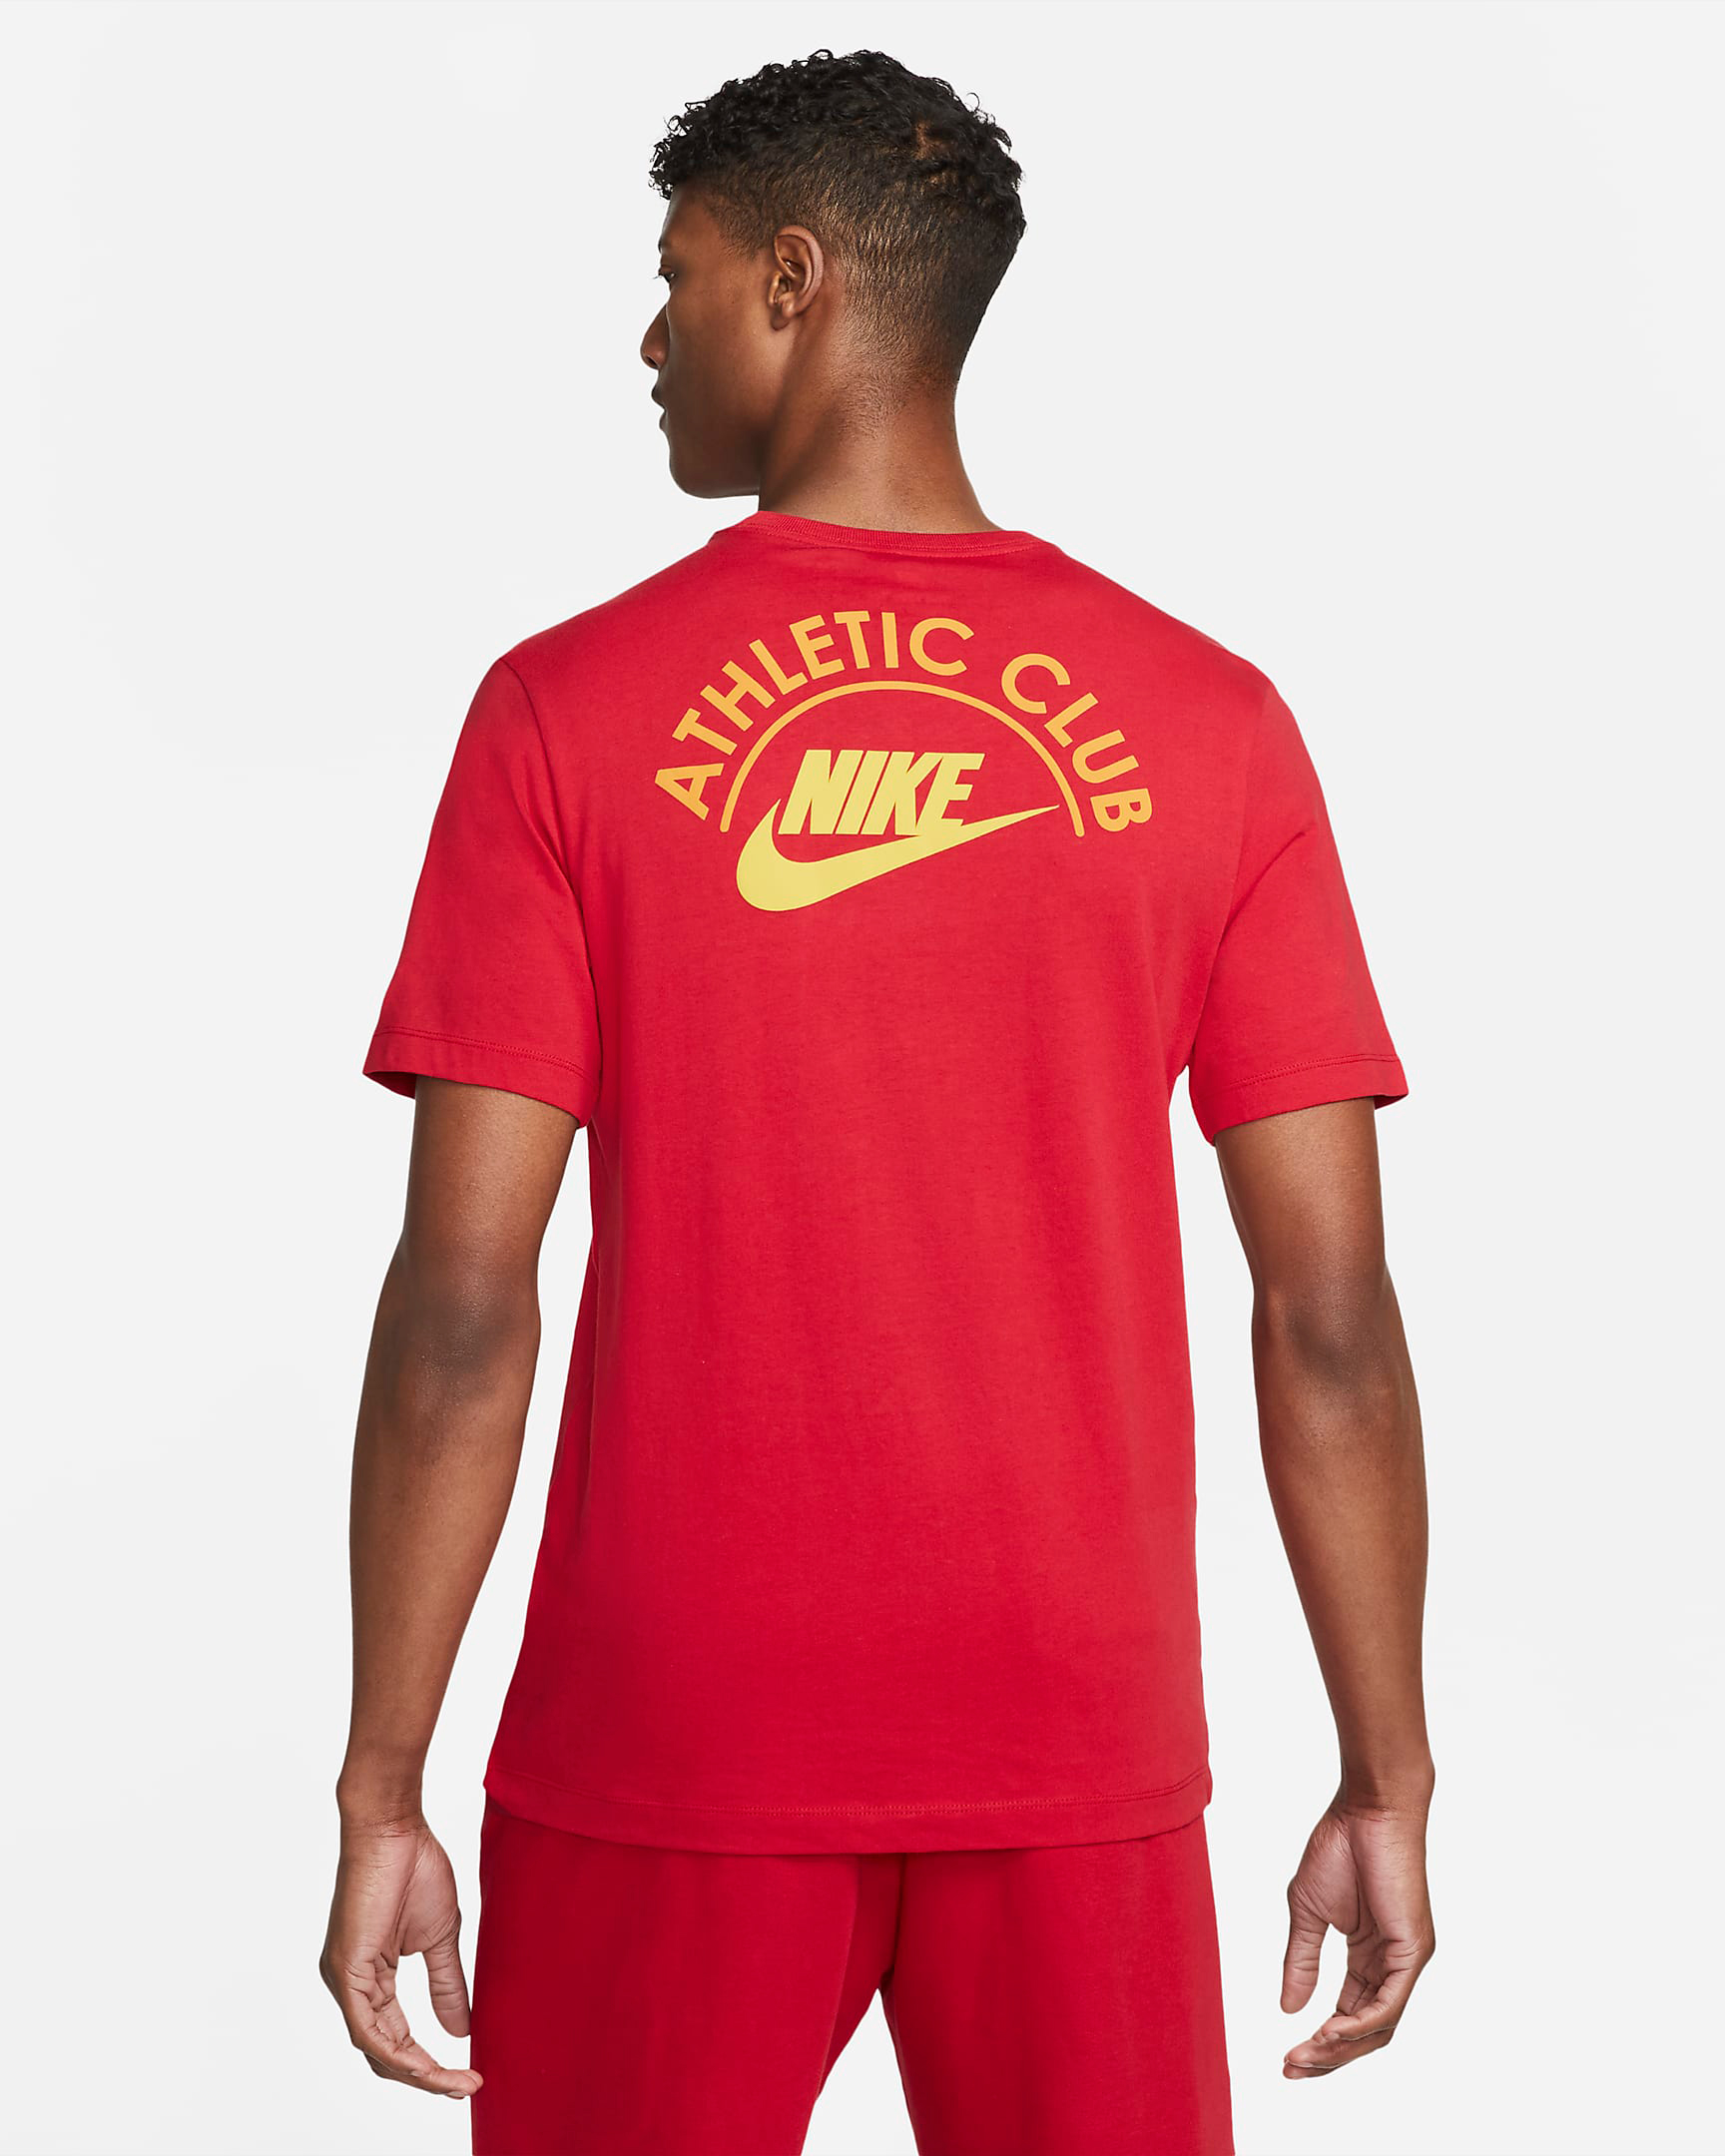 nike-athletic-club-t-shirt-red-yellow-2